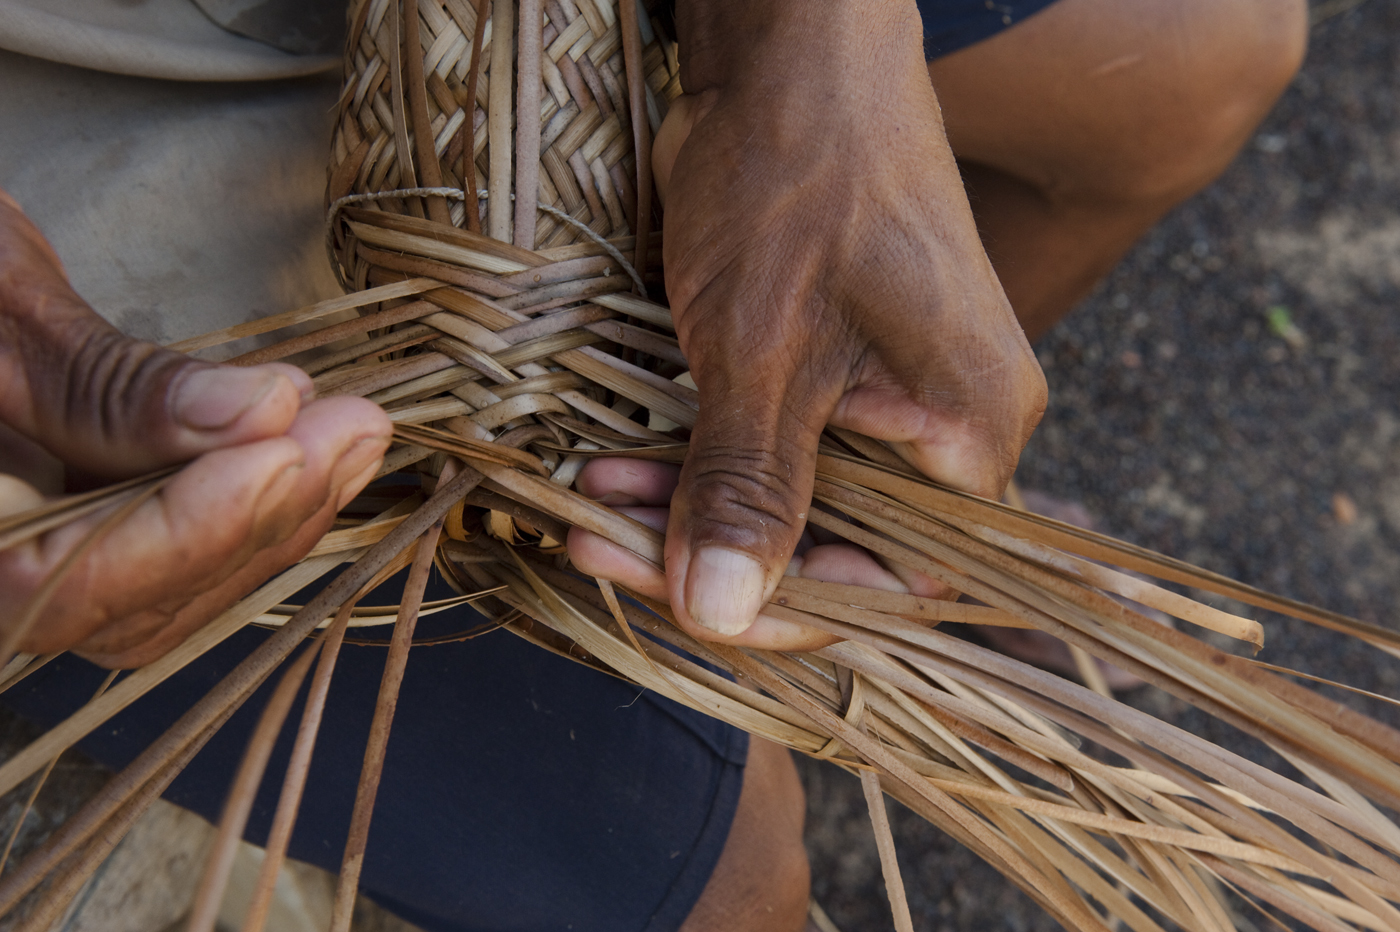 Macushi people &weaving split vine
Yupukari village
Savannah, Rupununi
GUYANA
South America